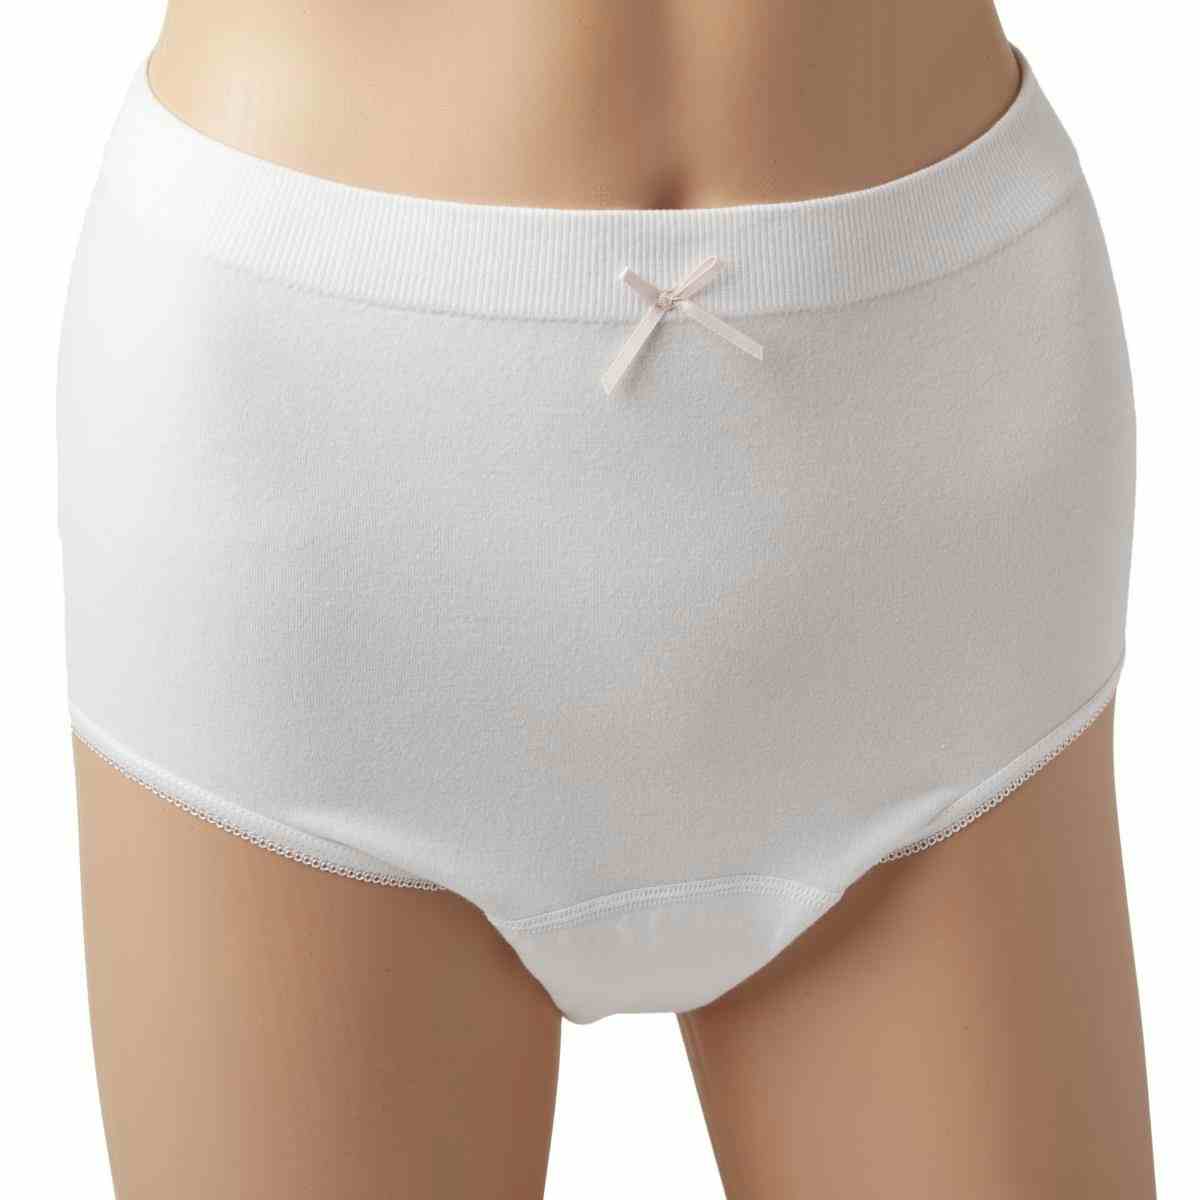 Medline Reusable Bladder Control Panties for Women, Light Absorbency, BCPANTSMZ, Small (22-25") - 1 Each